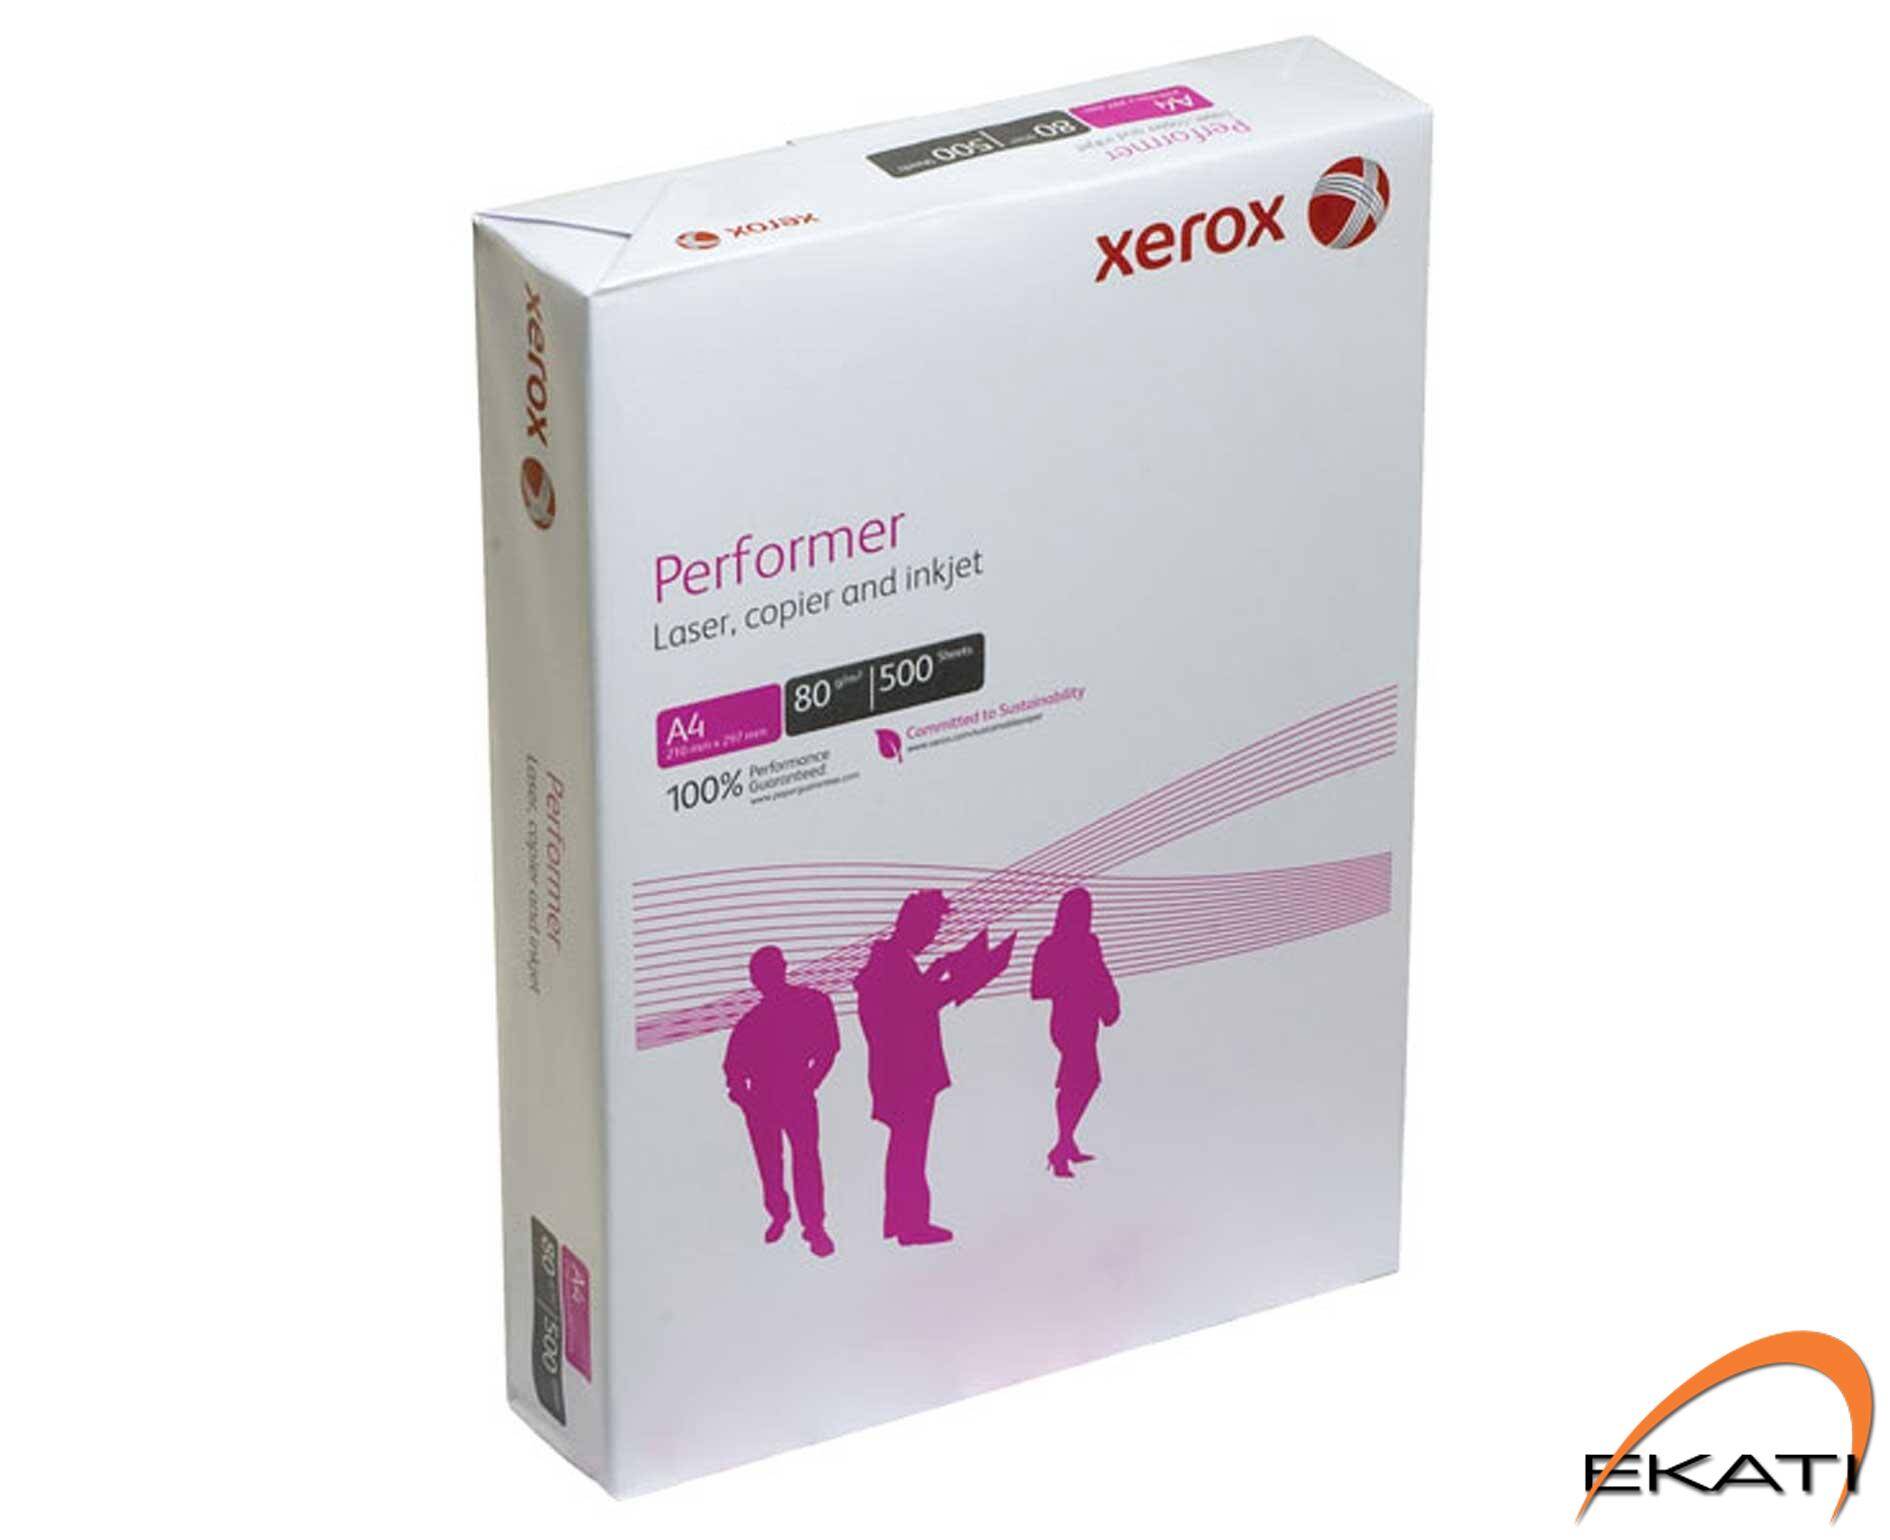 Papier xero A4/80g XEROX PERFORMER